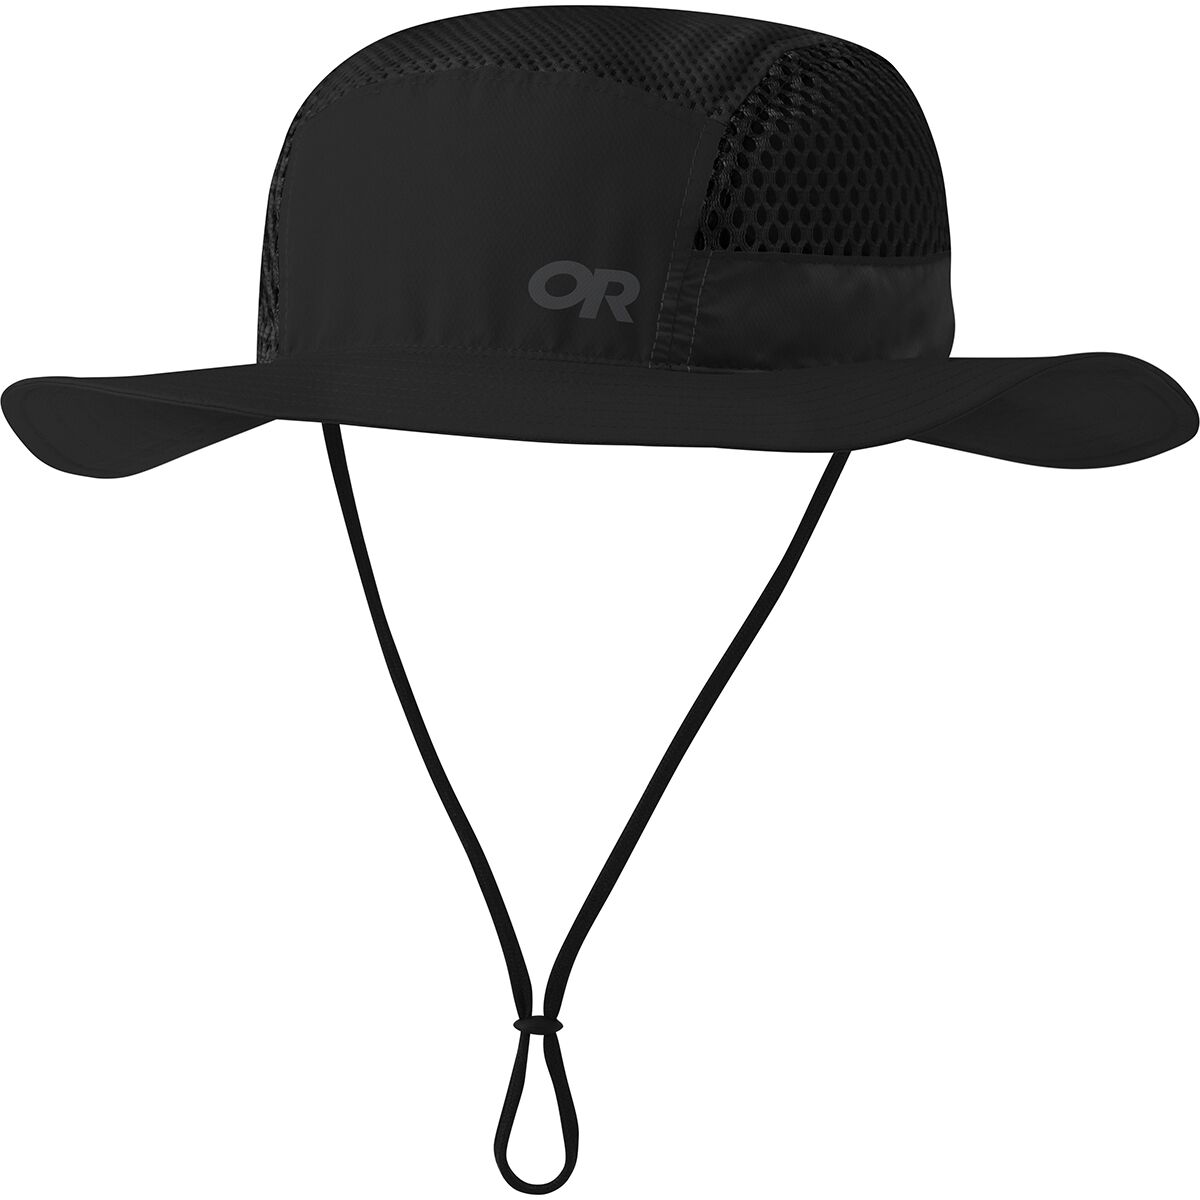 Outdoor Research Vantage Full Brim Hat - Accessories